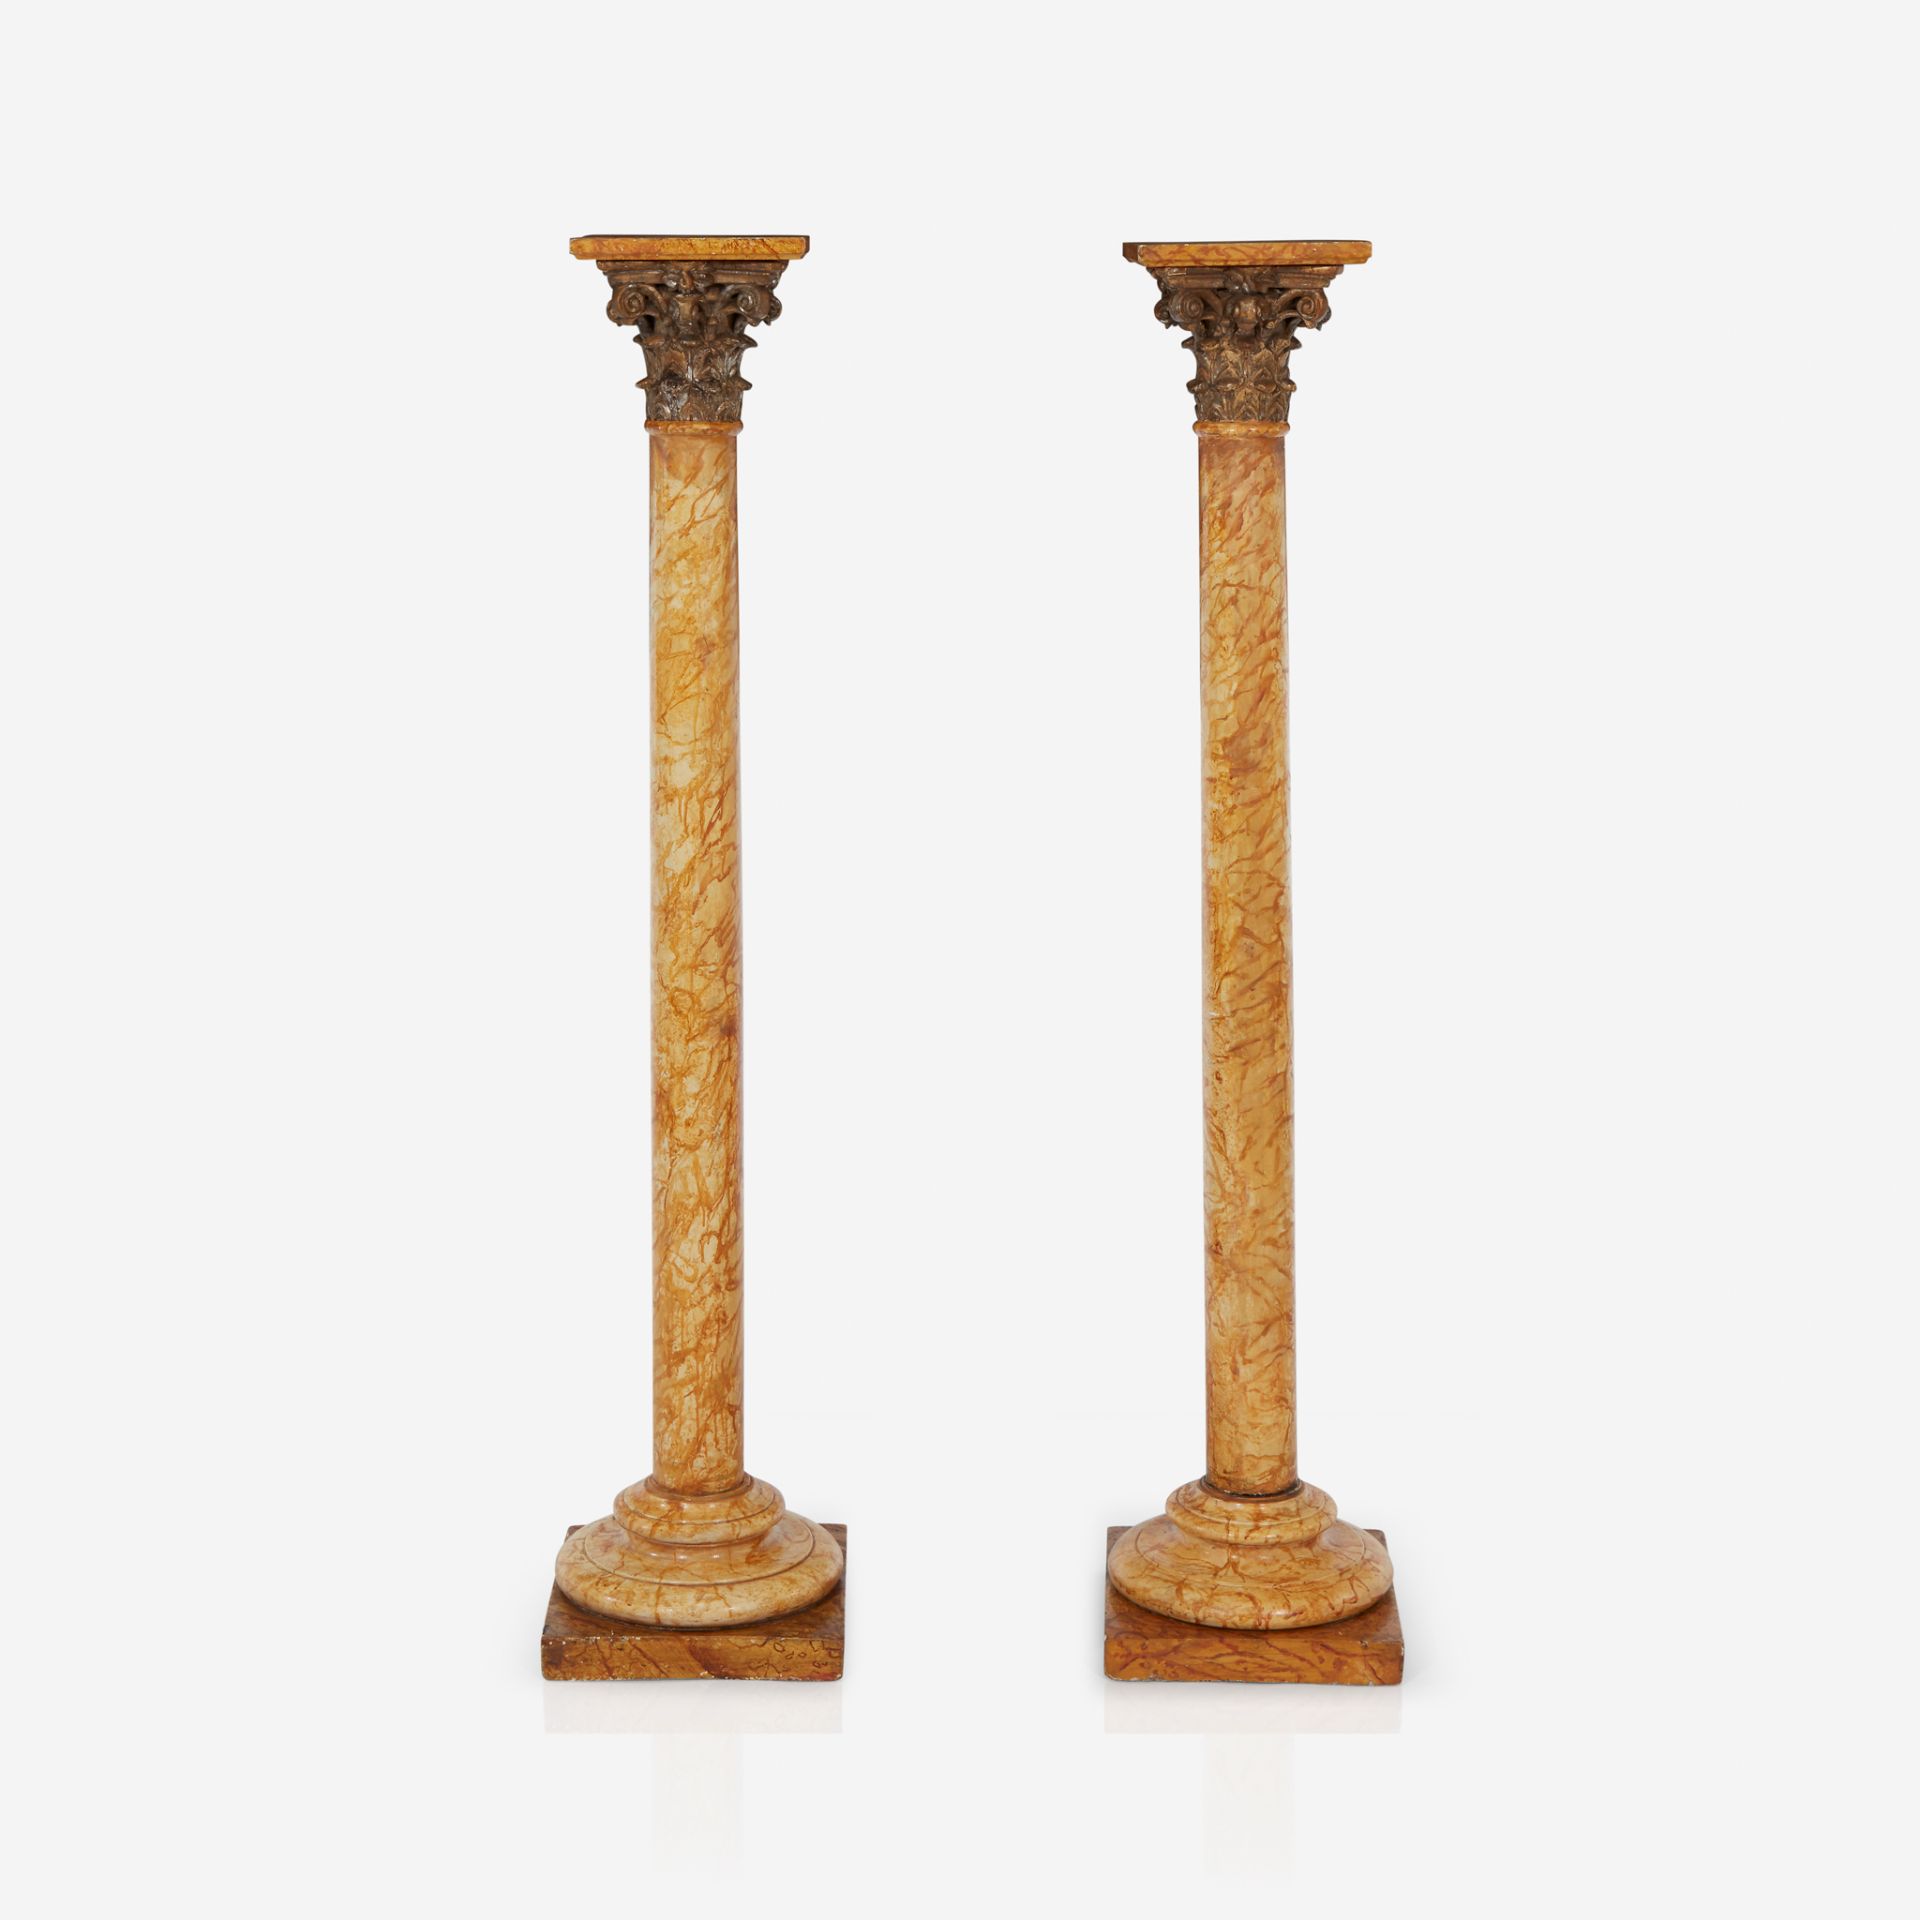 A pair of Victorian giltwood and faux marble Corinthian columns, Third quarter 19th century